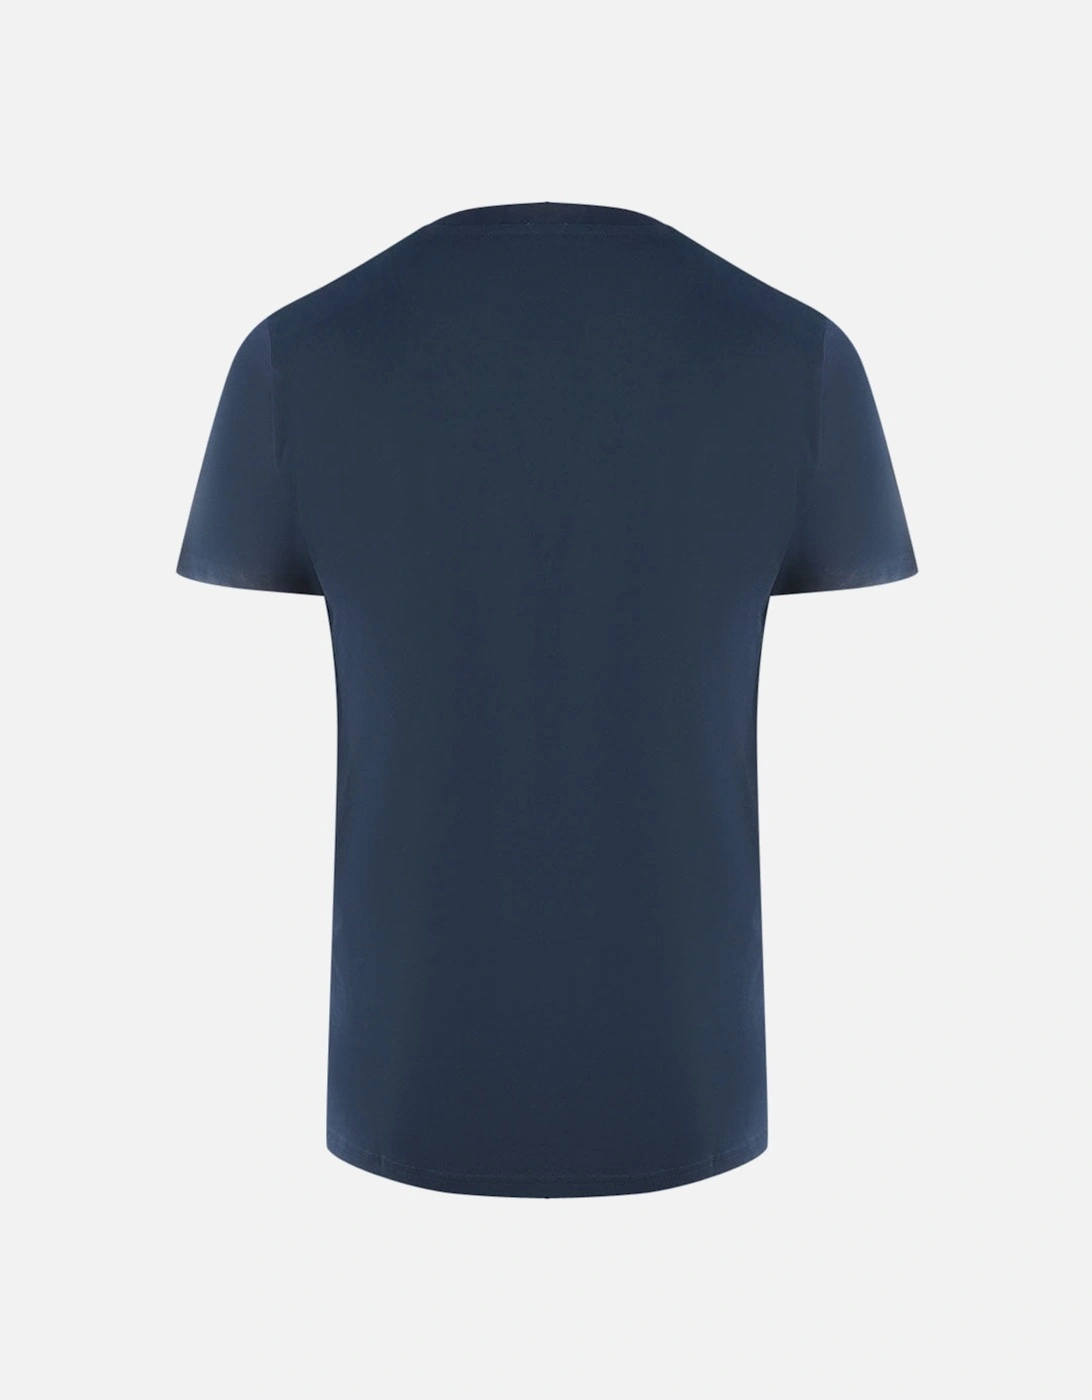 London Tonal Aldis Logo Navy Blue T-Shirt